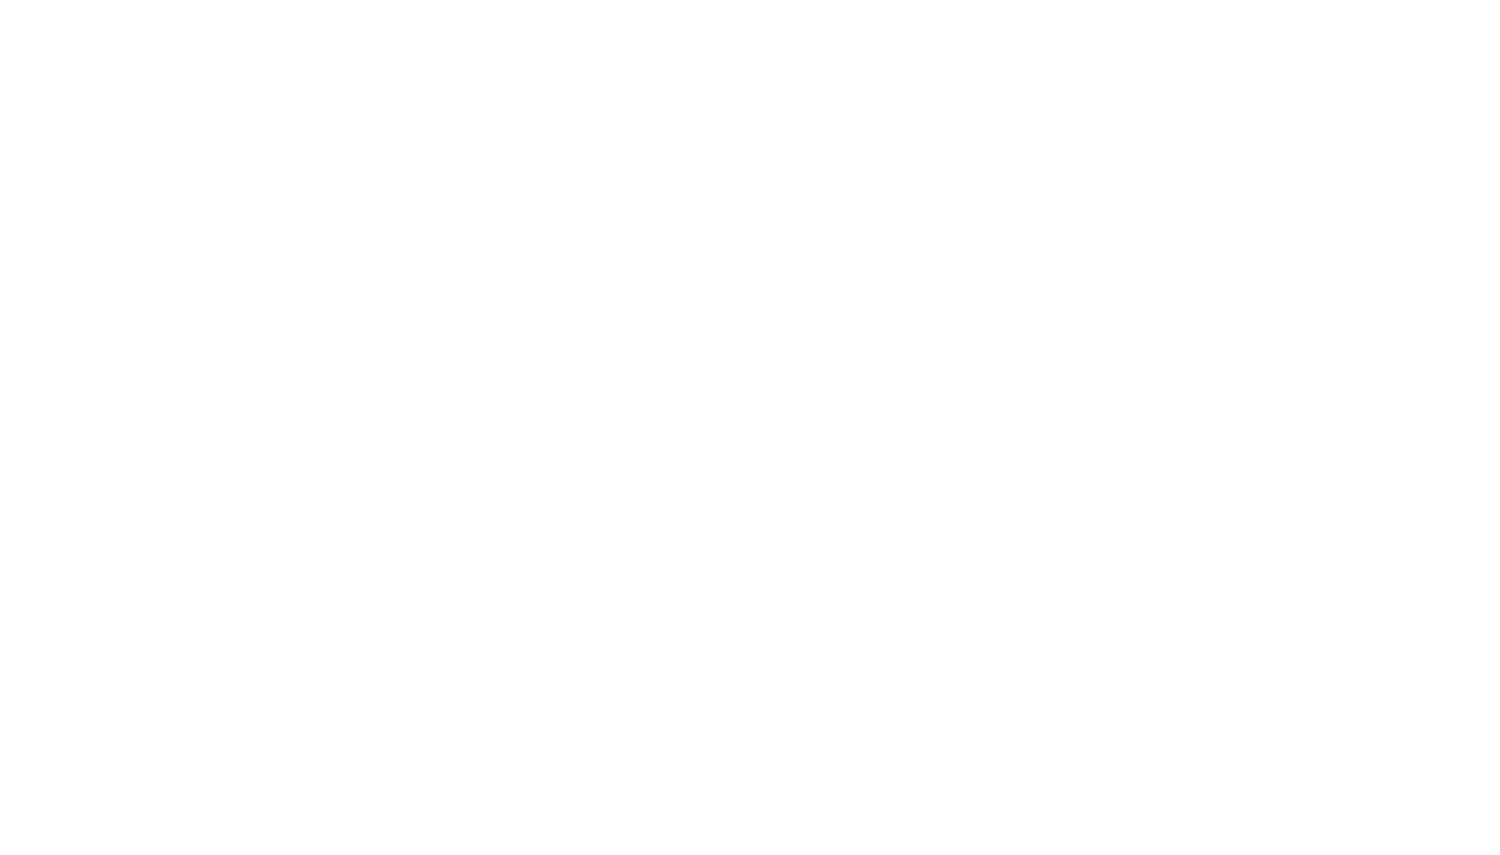 Lindsay Fort Real Estate Photography